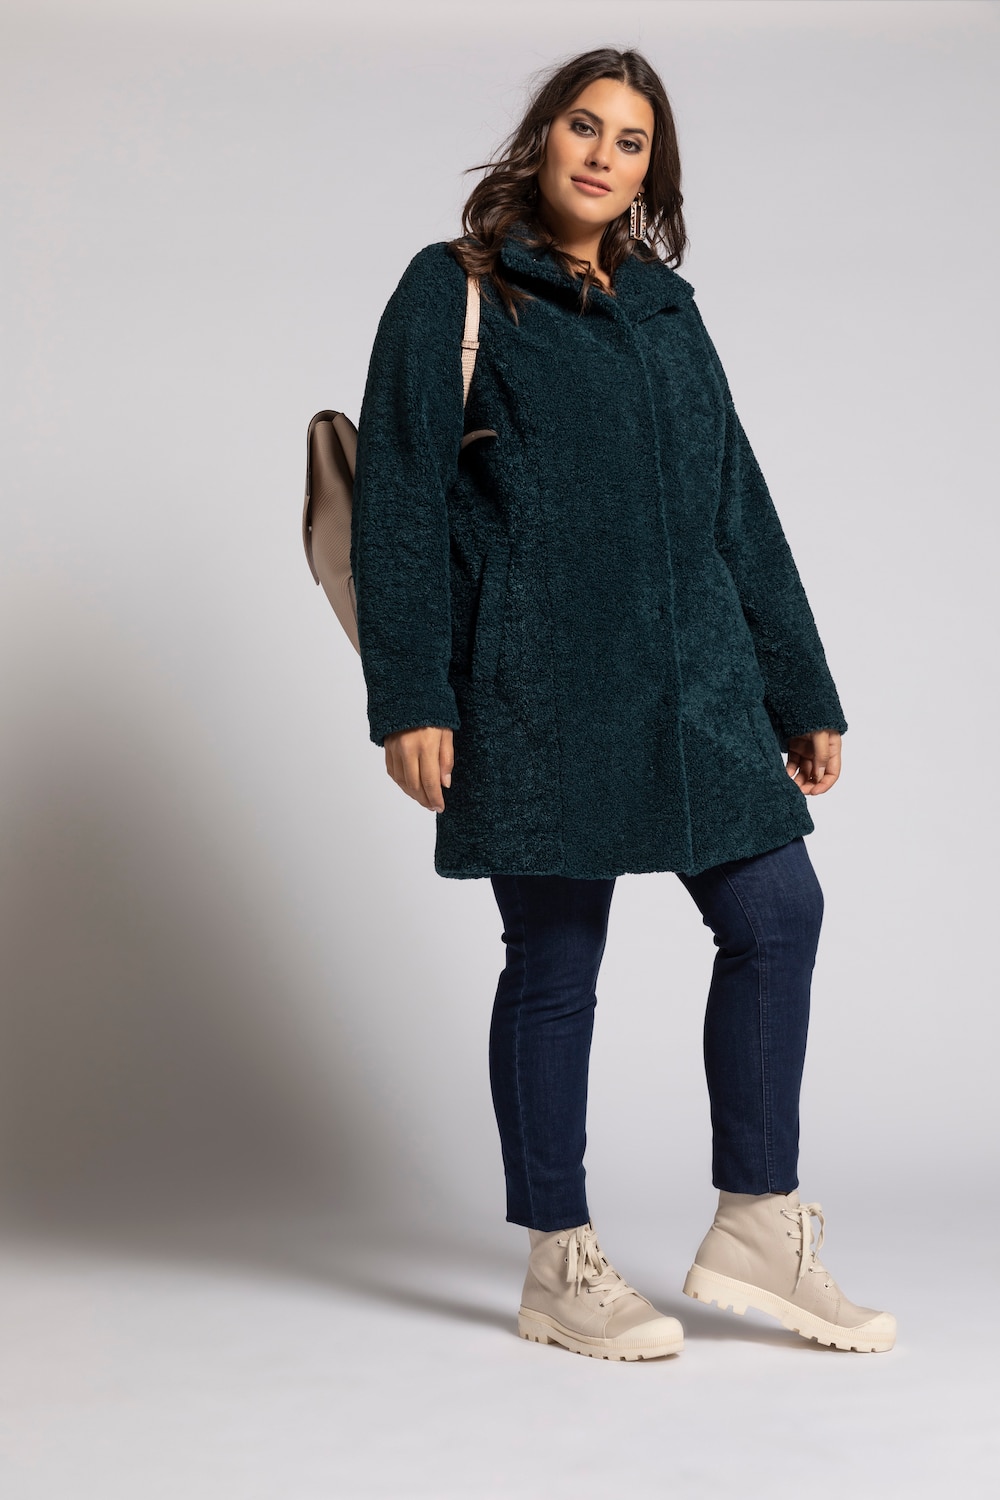 Plus Size Teddy Bear Fur Fully Lined Coat, Woman, turquoise, size: 16/18, polyester, Ulla Popken